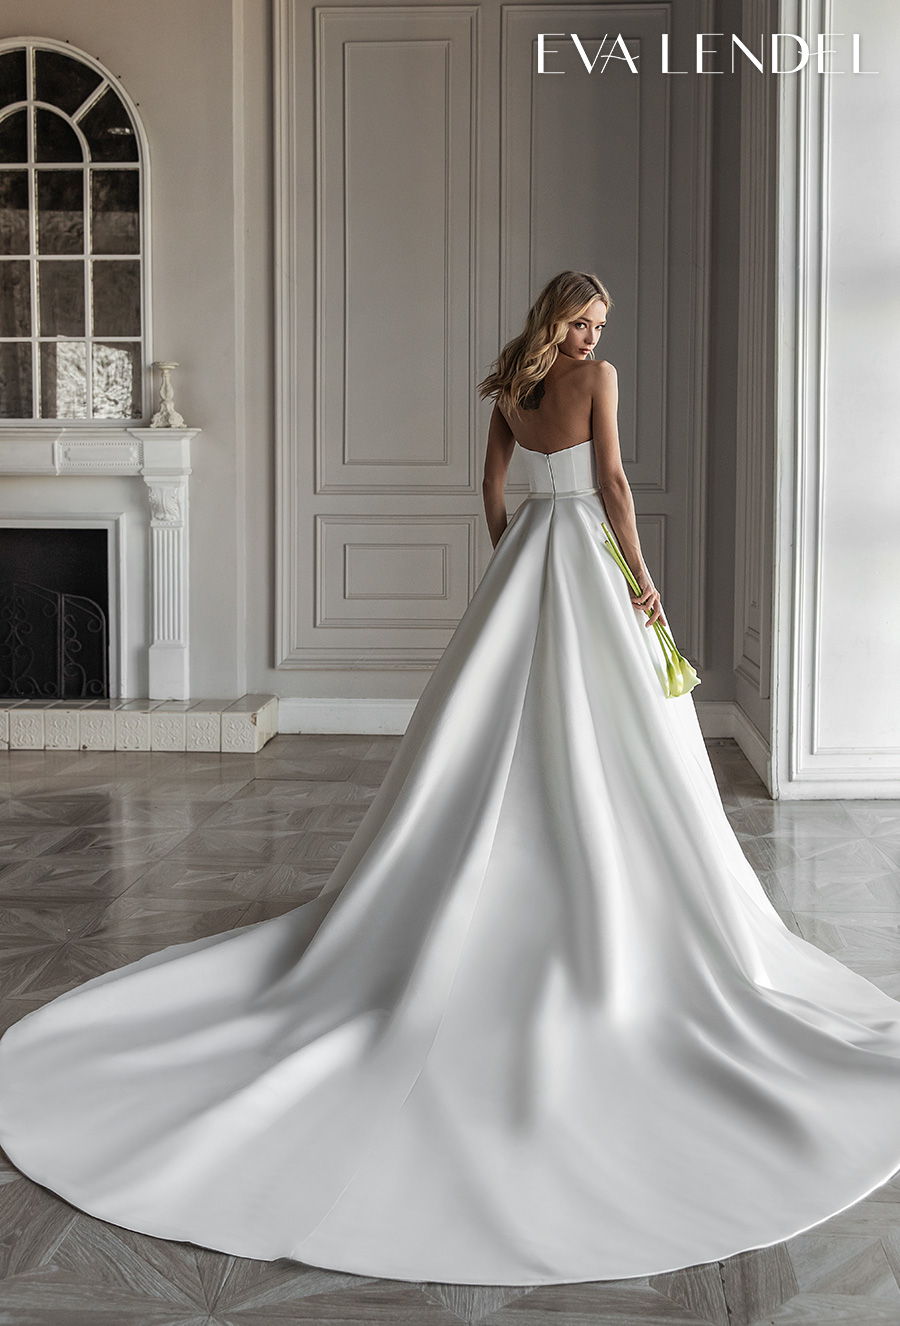 https://www.weddinginspirasi.com/wp-content/uploads/2020/07/eva-lendel-2021-bridal-strapless-sweetheart-neckline-simple-button-front-romantic-a-line-wedding-dress-with-pockets-mid-back-royal-train-diora-bv.jpg